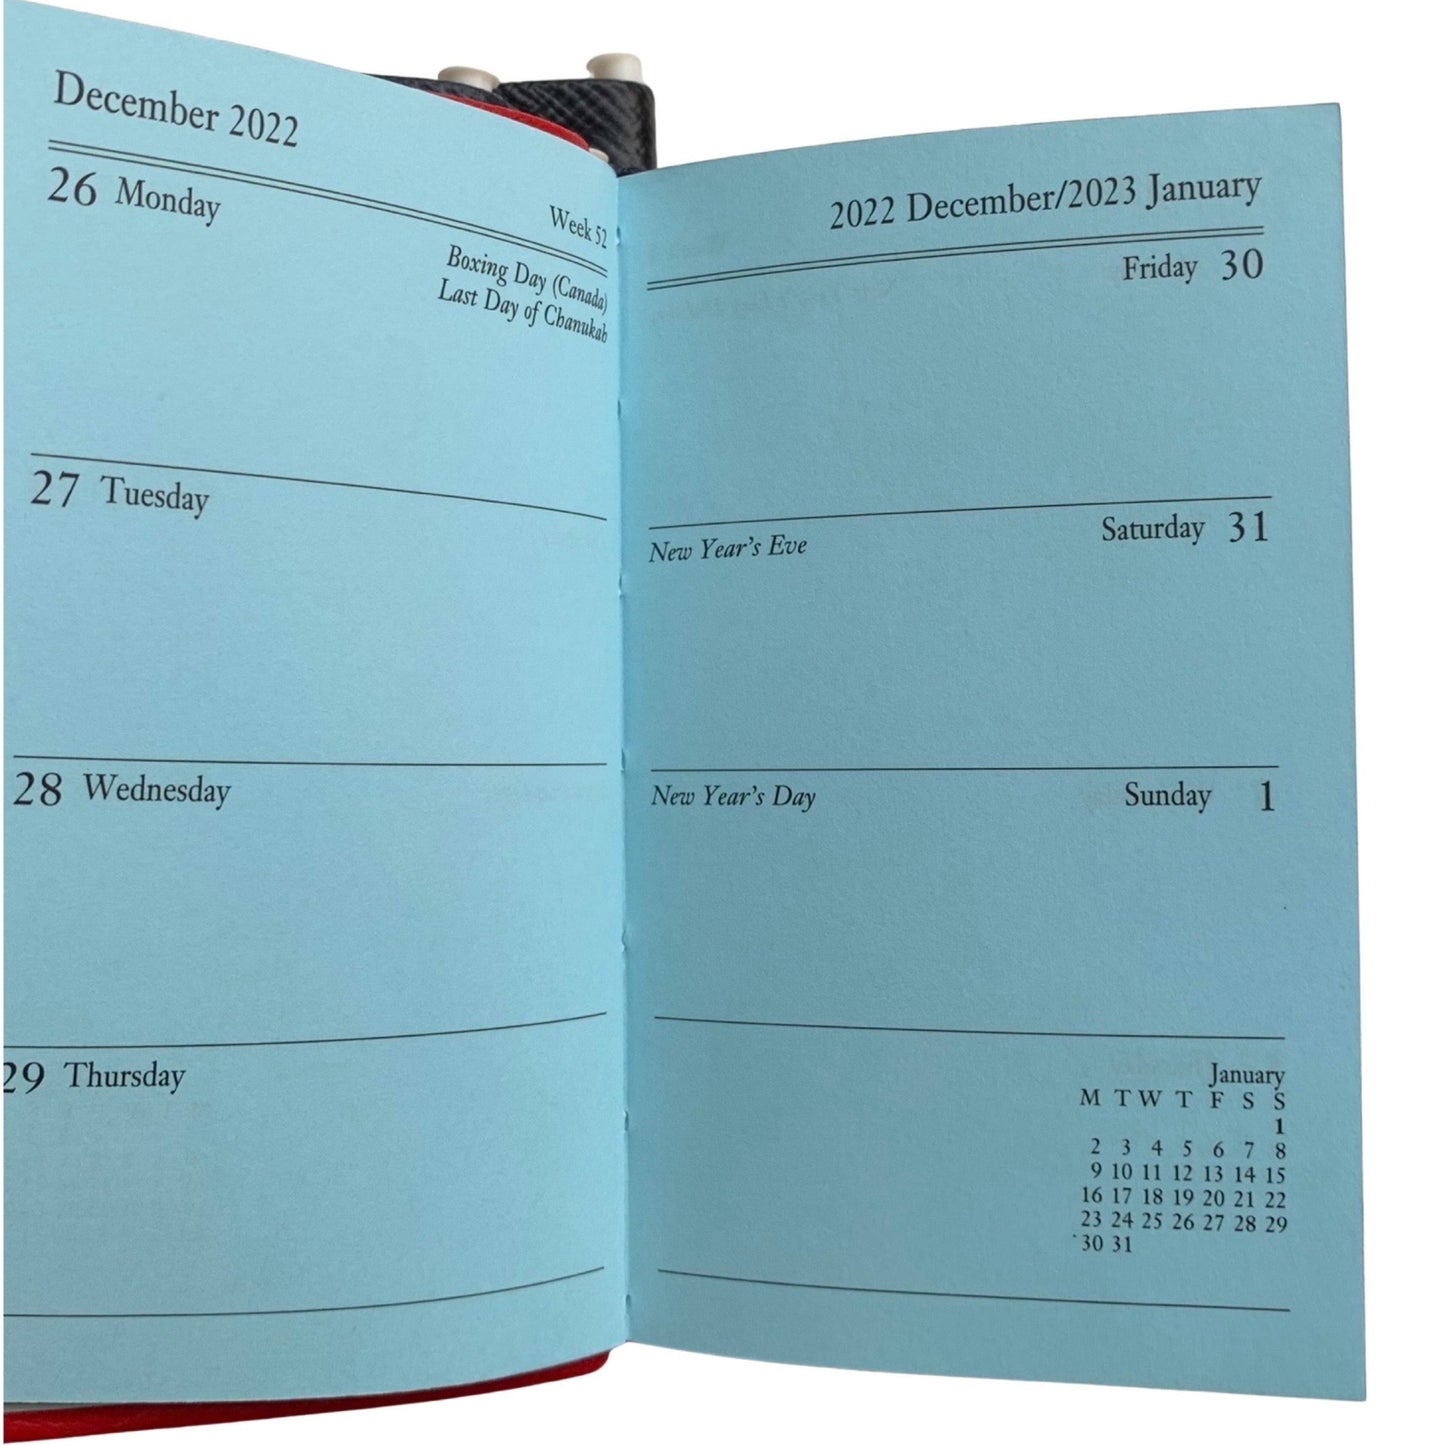 YEAR 2023 CROSSGRAIN Leather Pocket Calendar Book | 4 x 2.5" | Pencil in Spine | D742LJ